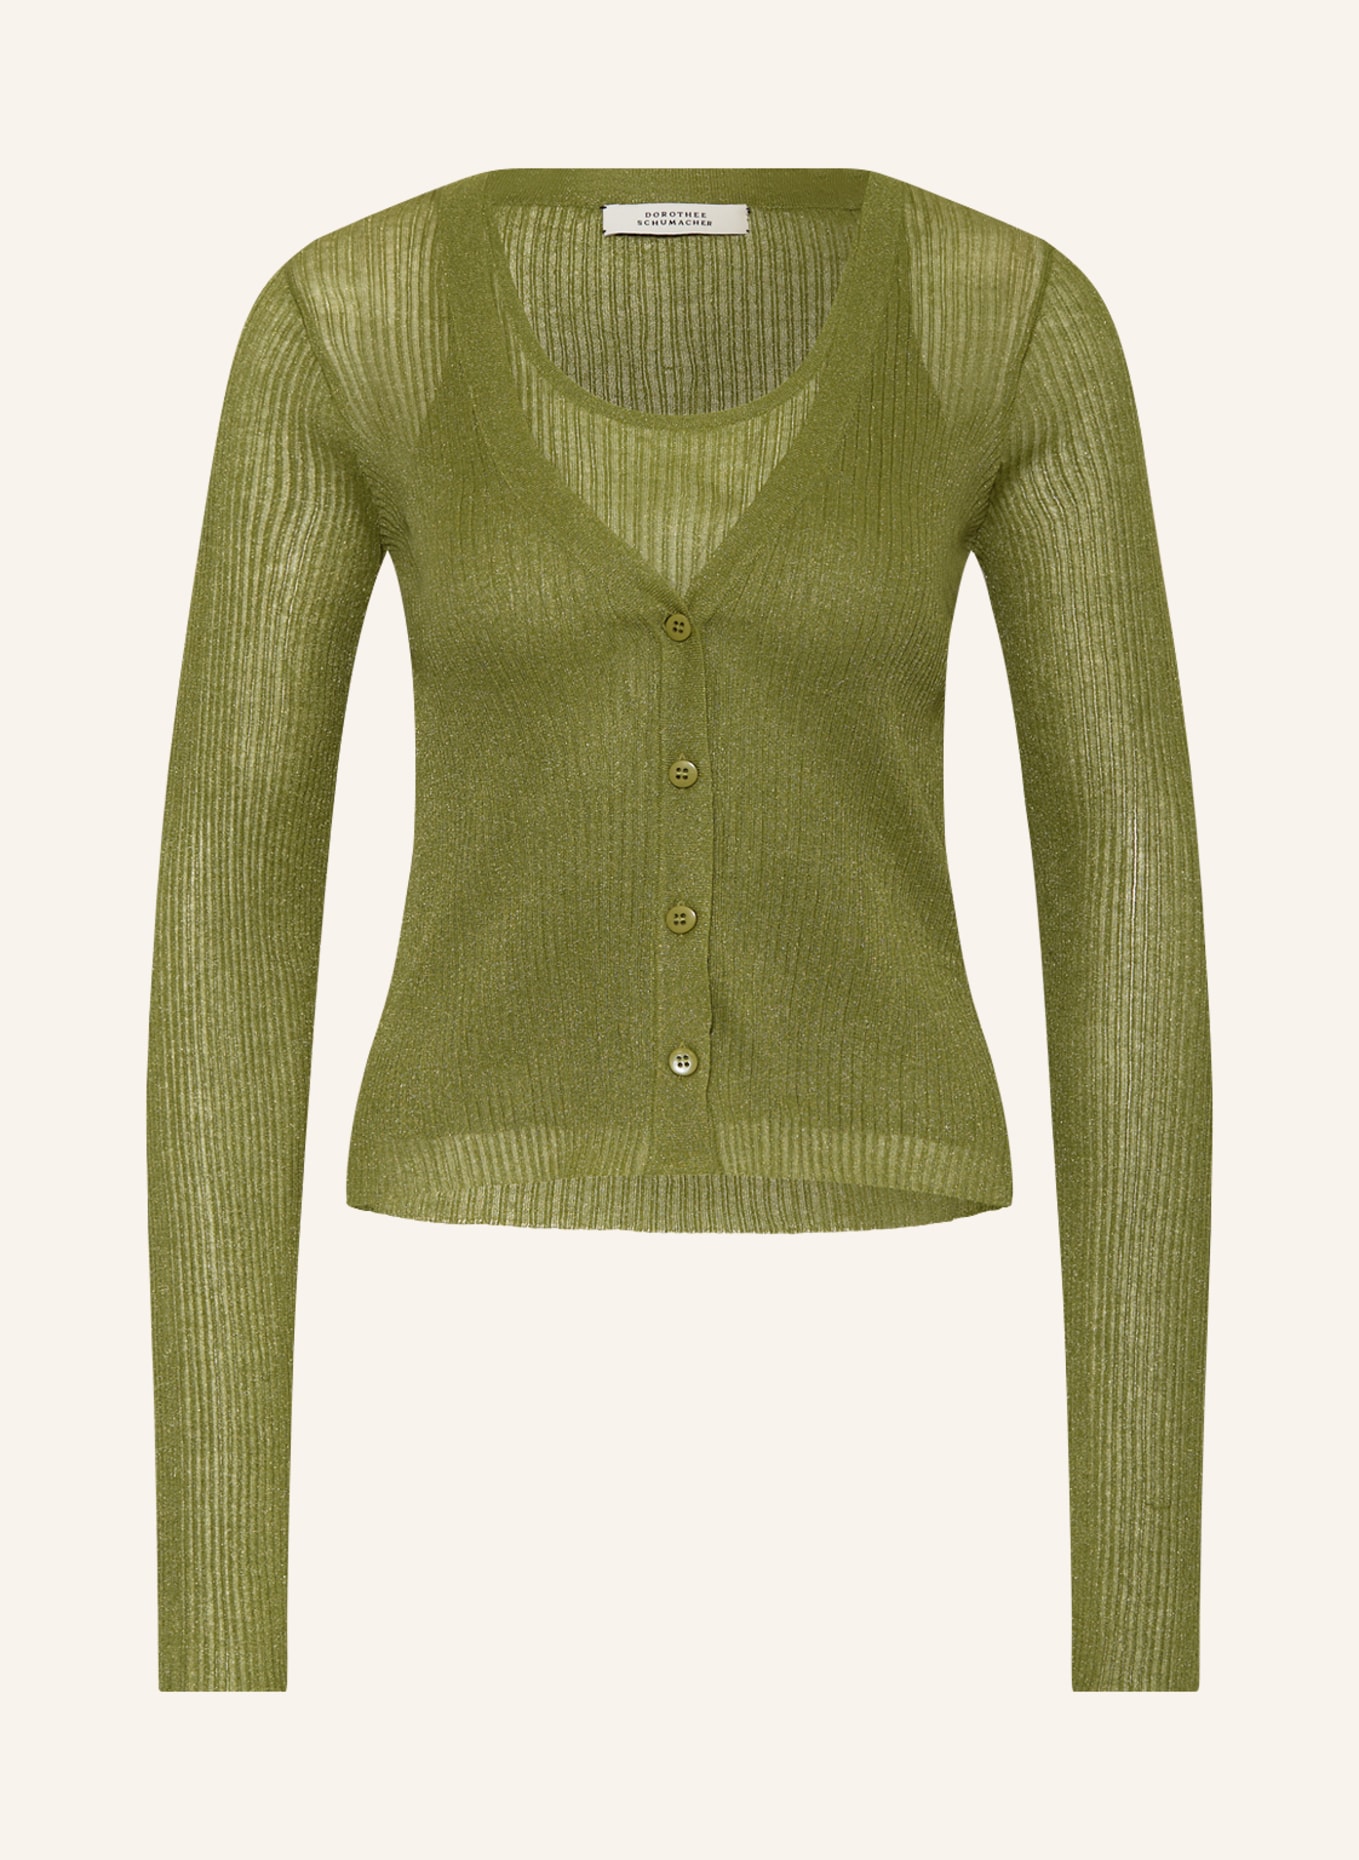 DOROTHEE SCHUMACHER Set: Knit top and cardigan, Color: 561 oliv (Image 1)